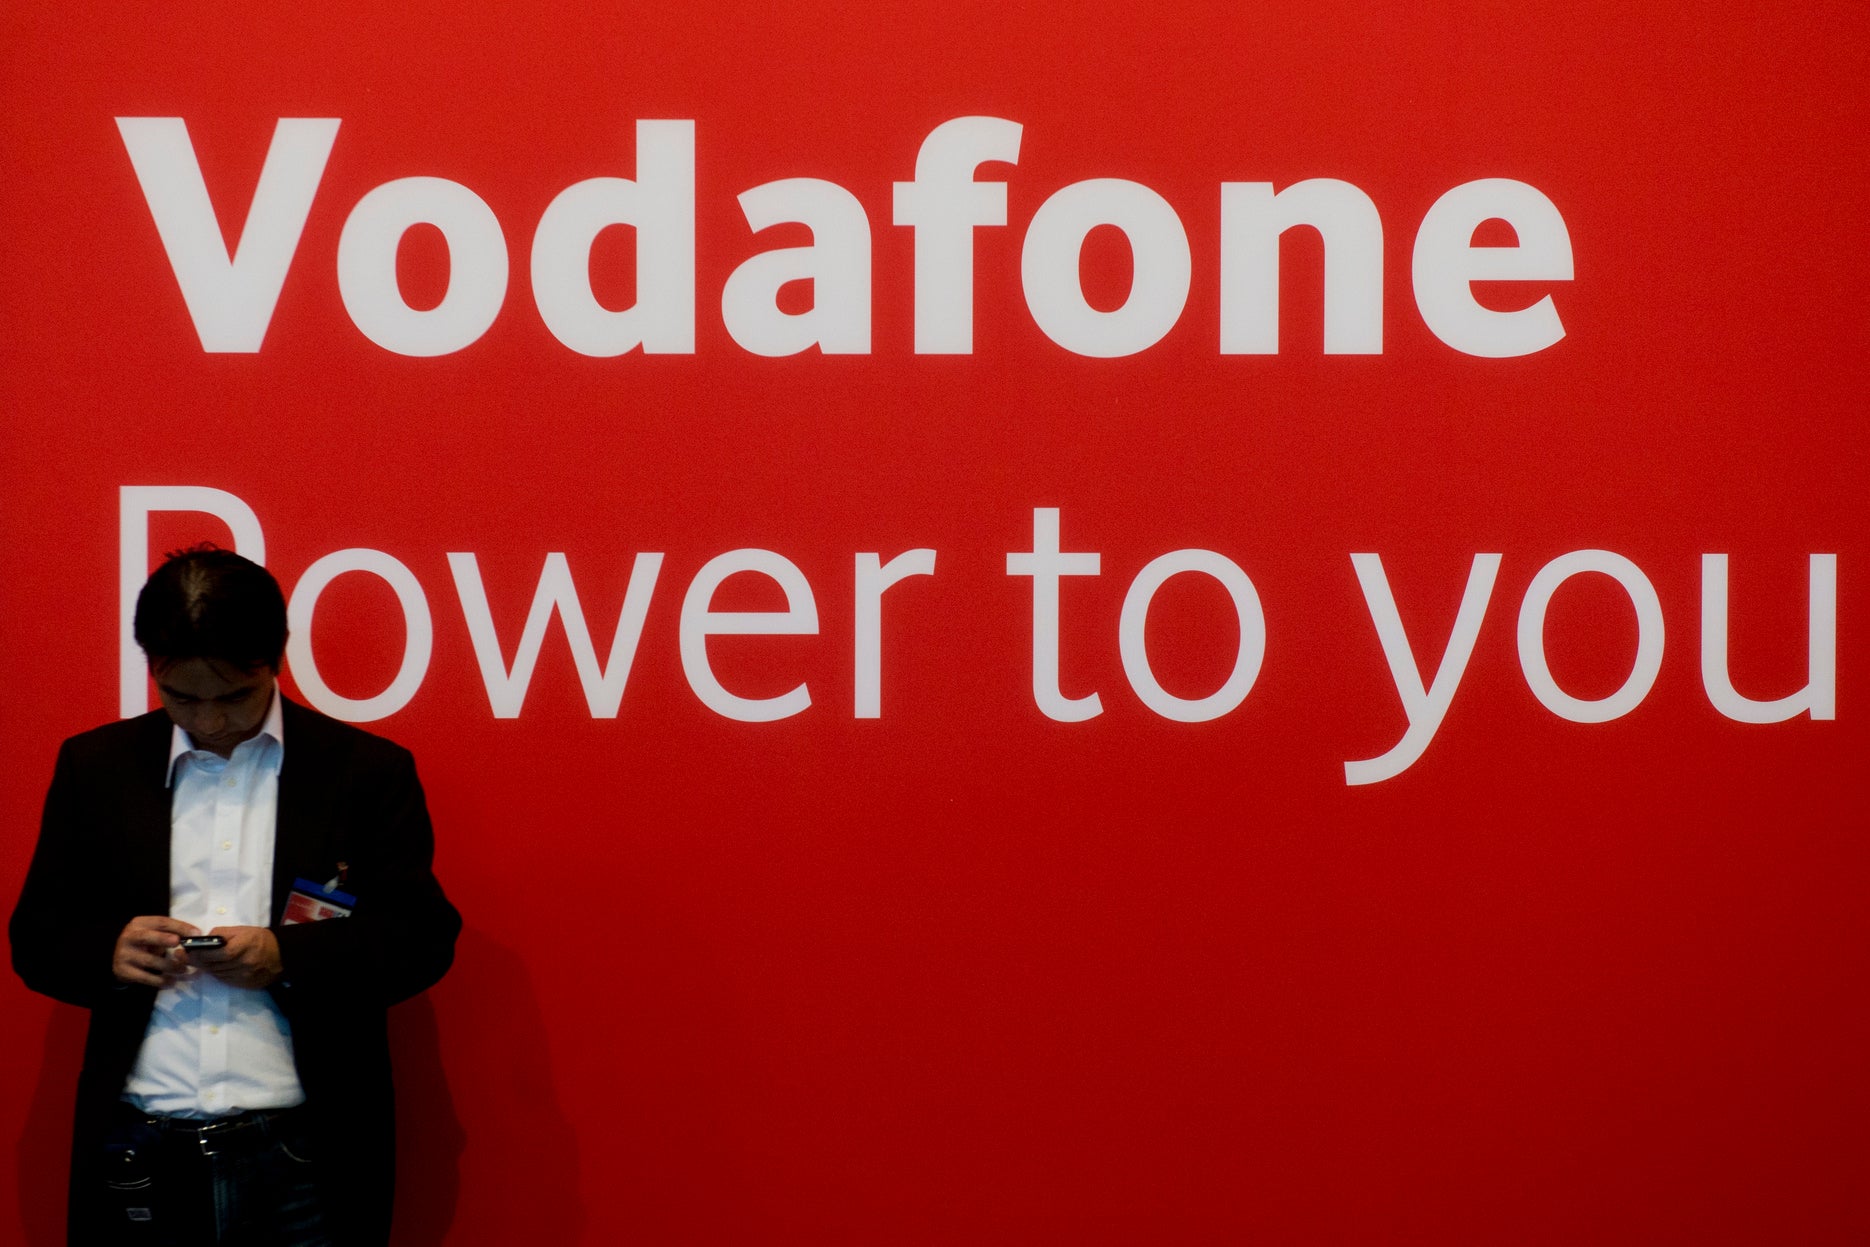 A fair-goer checks his mobile device in front of a Vodafone logo.